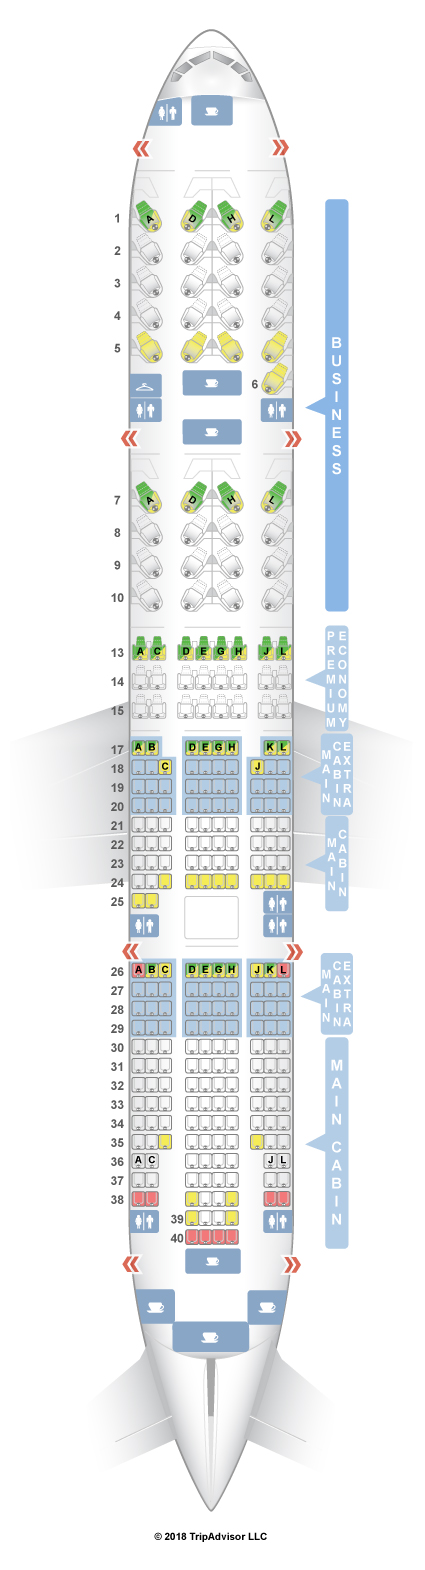 omni air 777 seat chart